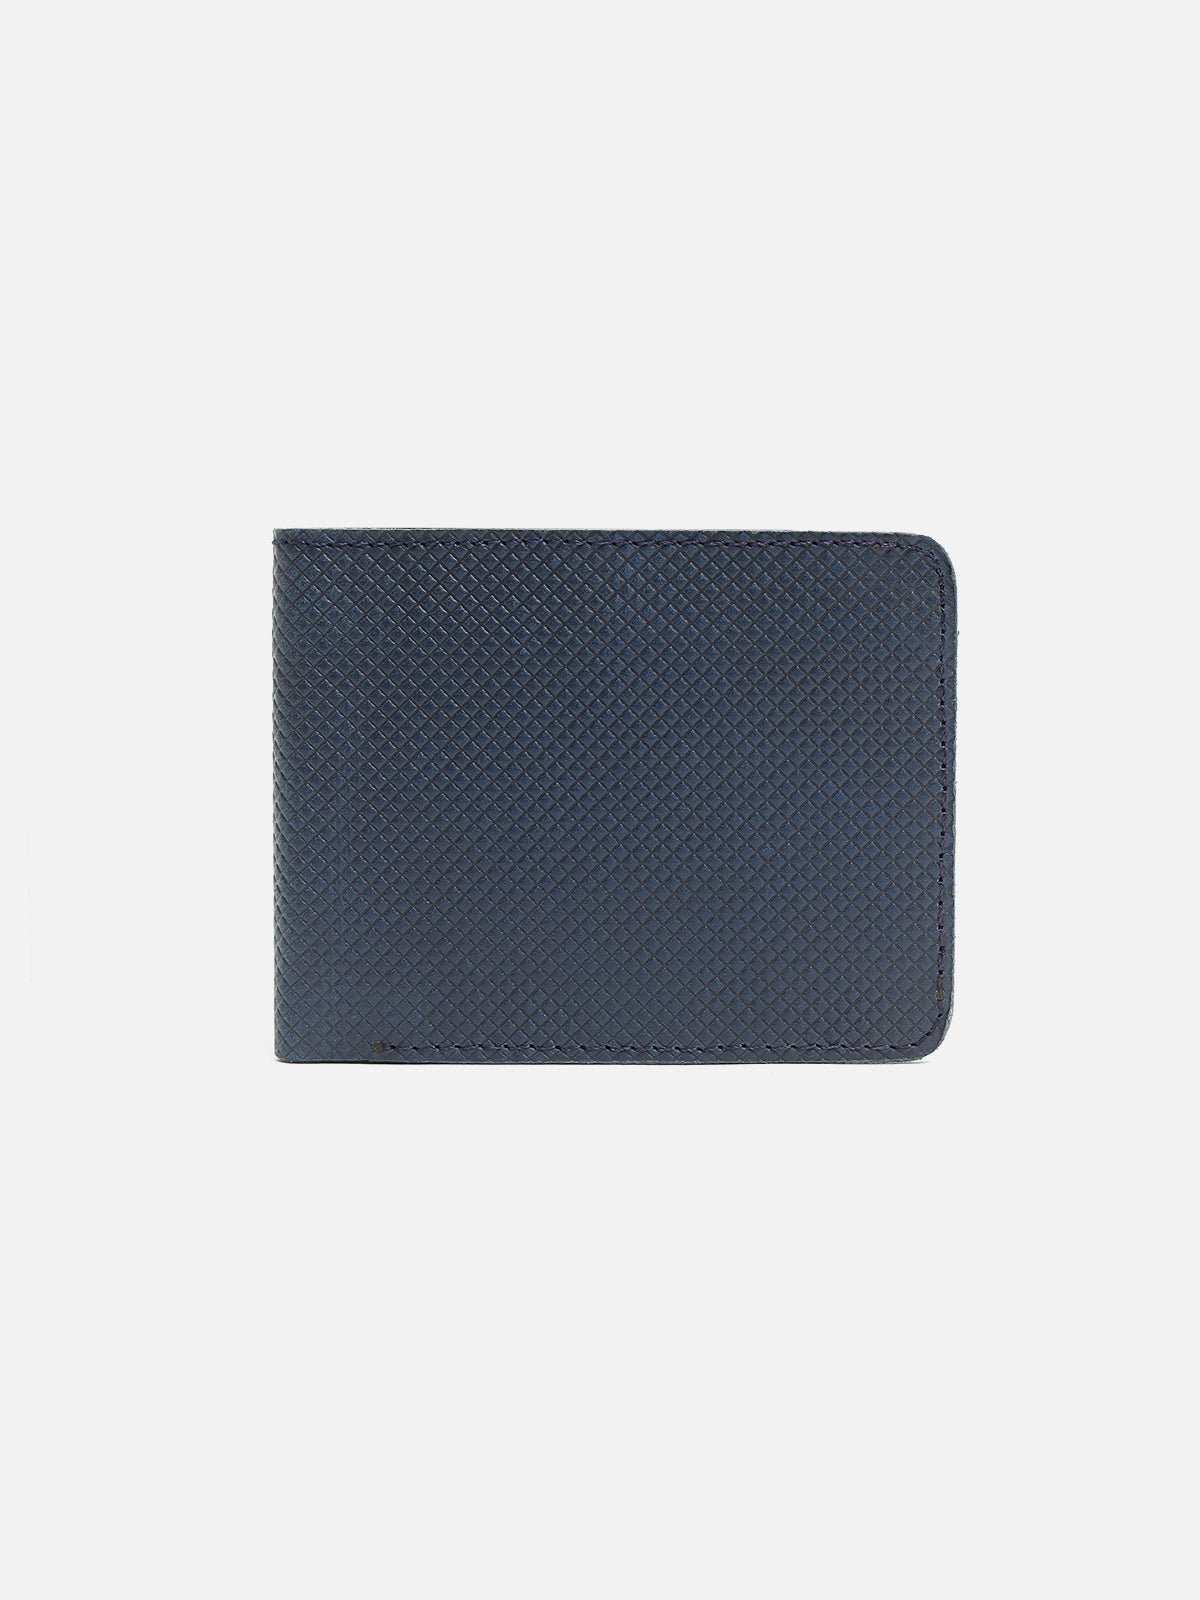 Grey Leather Wallet - FAMW23-032